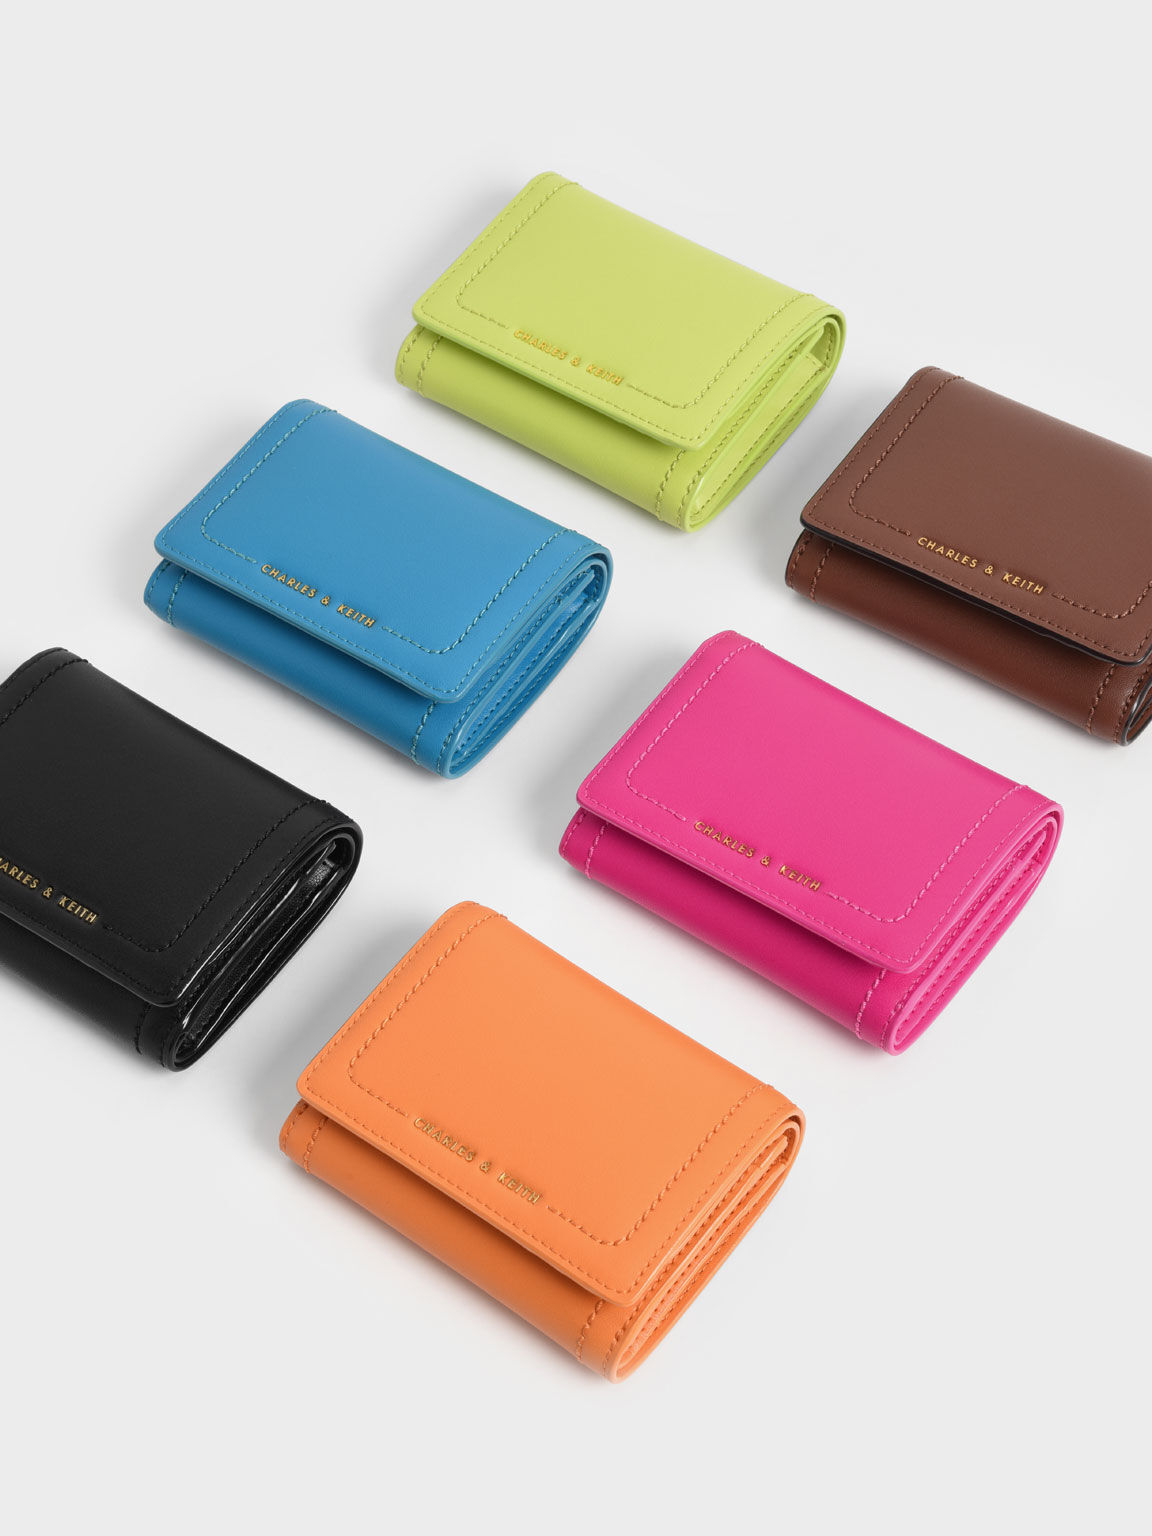 Siera 2.0 Mini Snap Button Wallet – DEC Collection